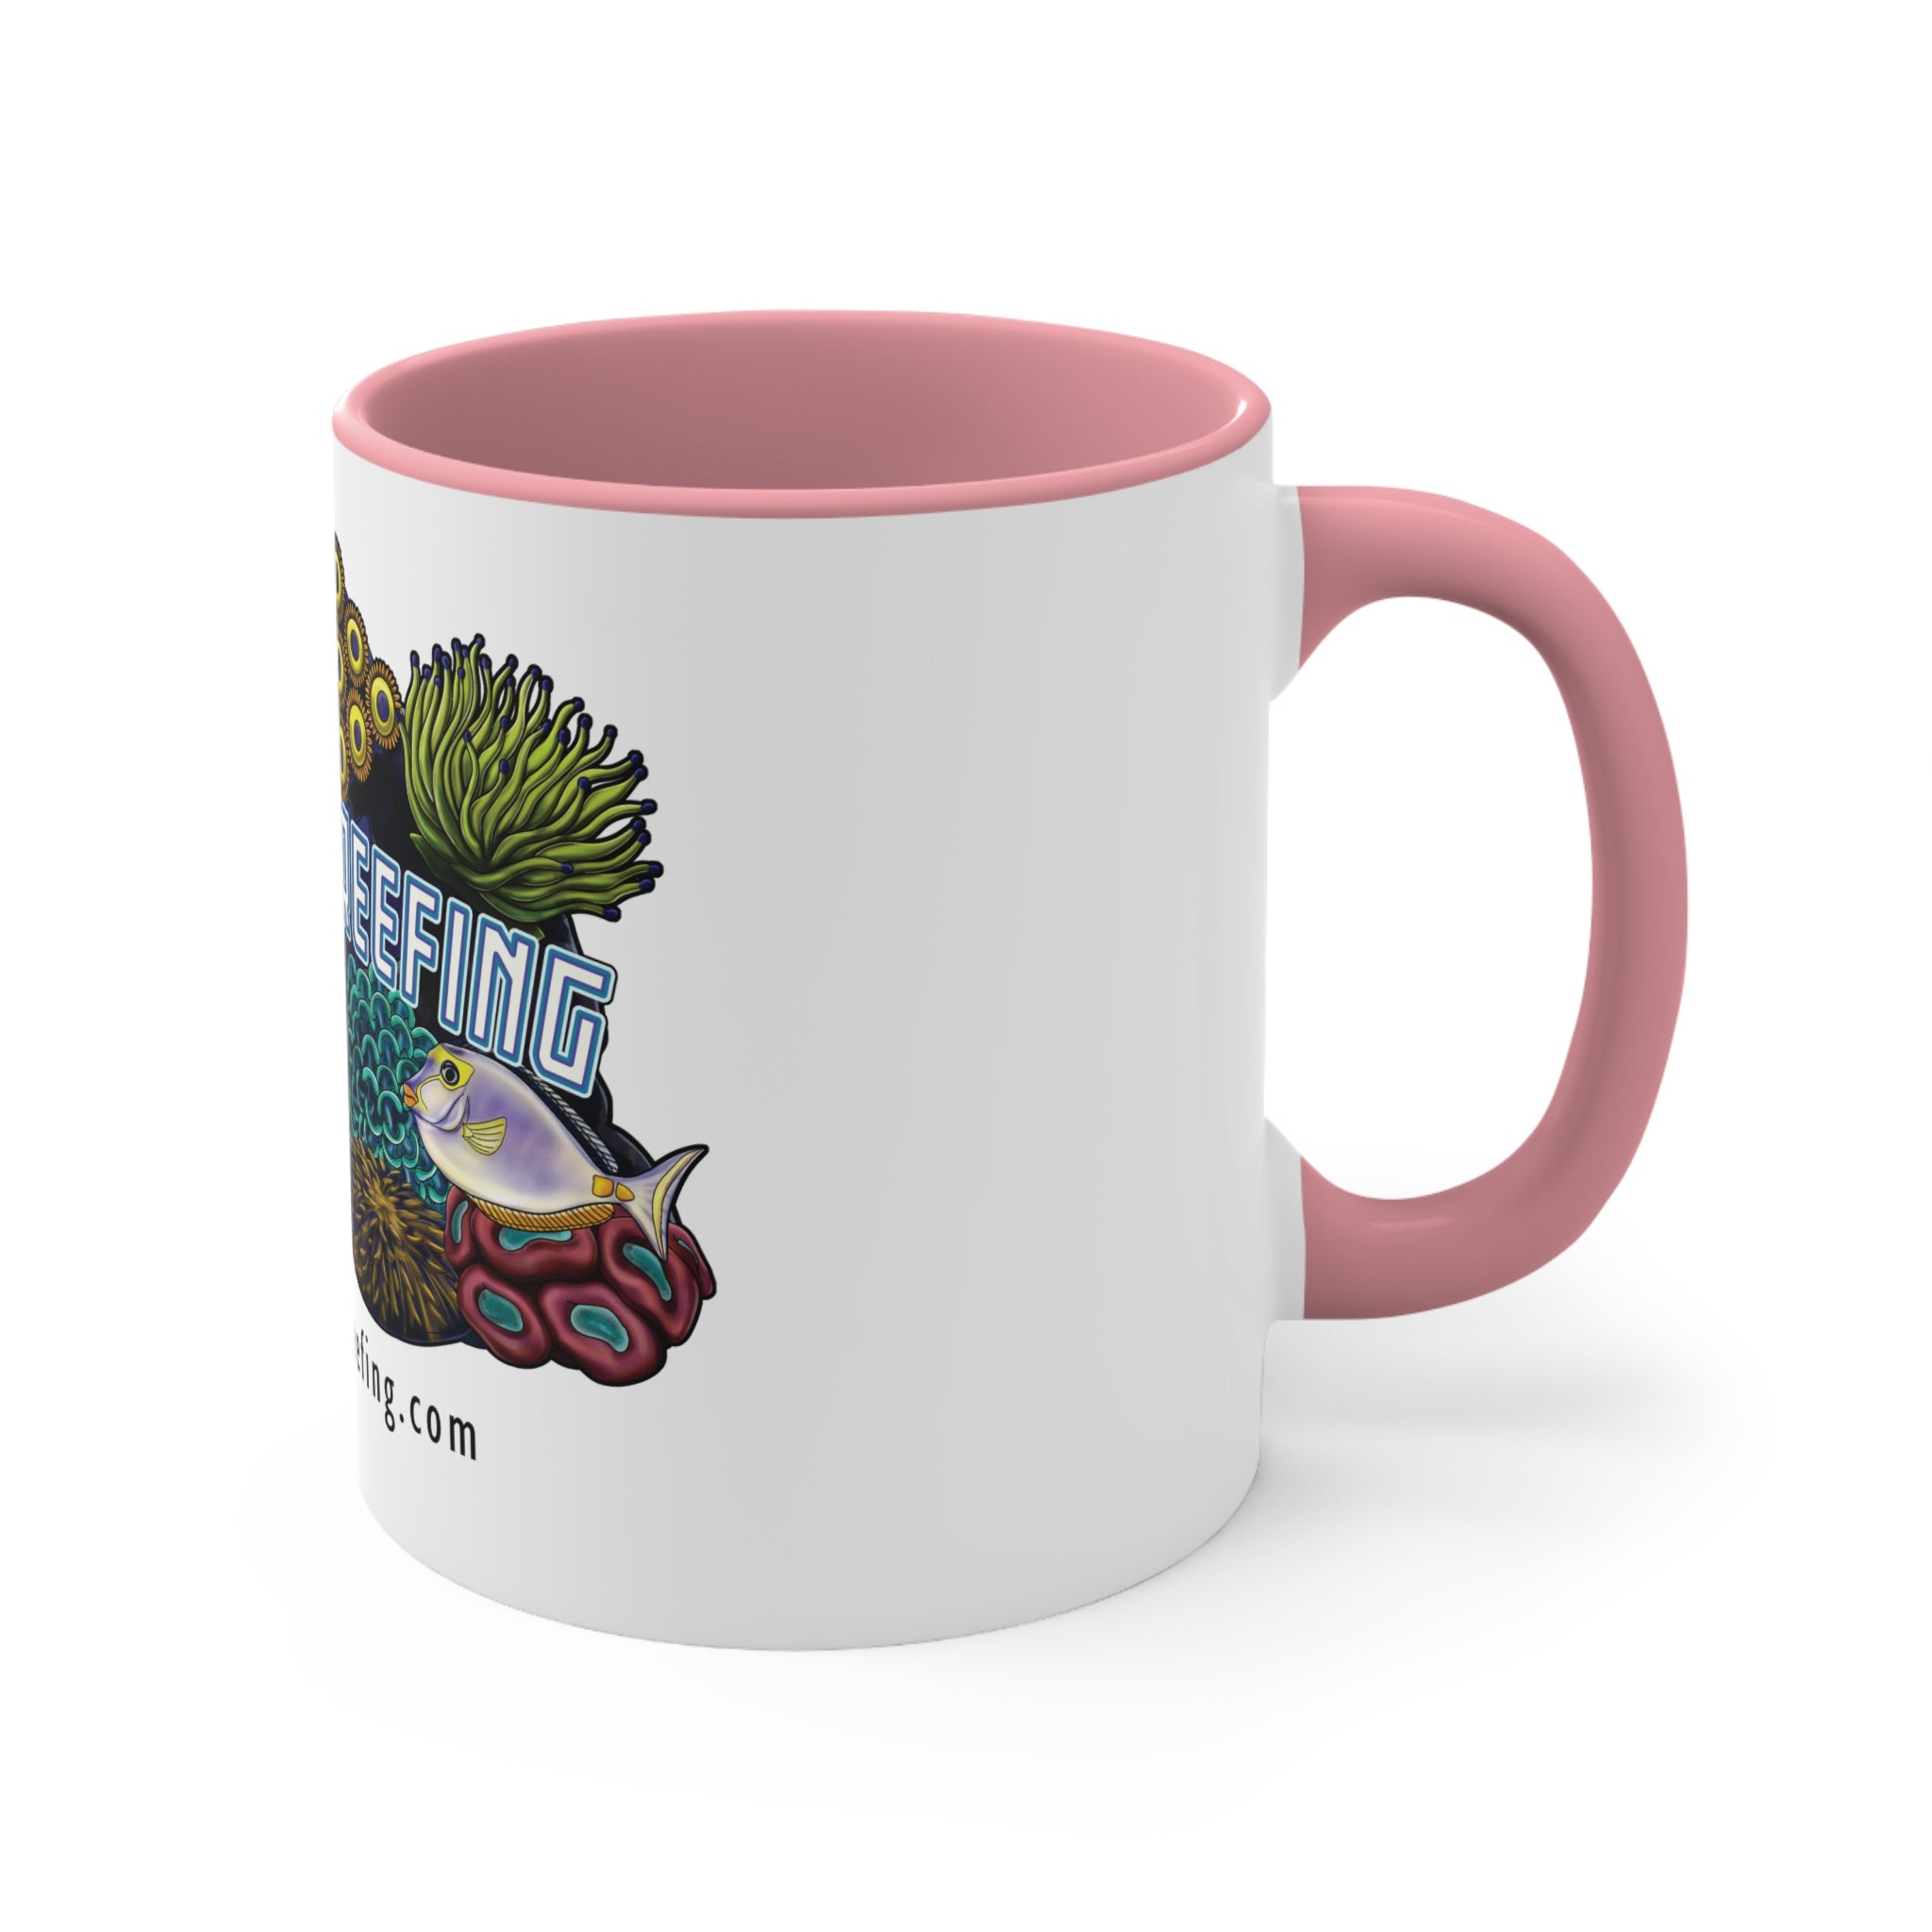 Lakeside Reefing Accent Coffee Mug, 11oz